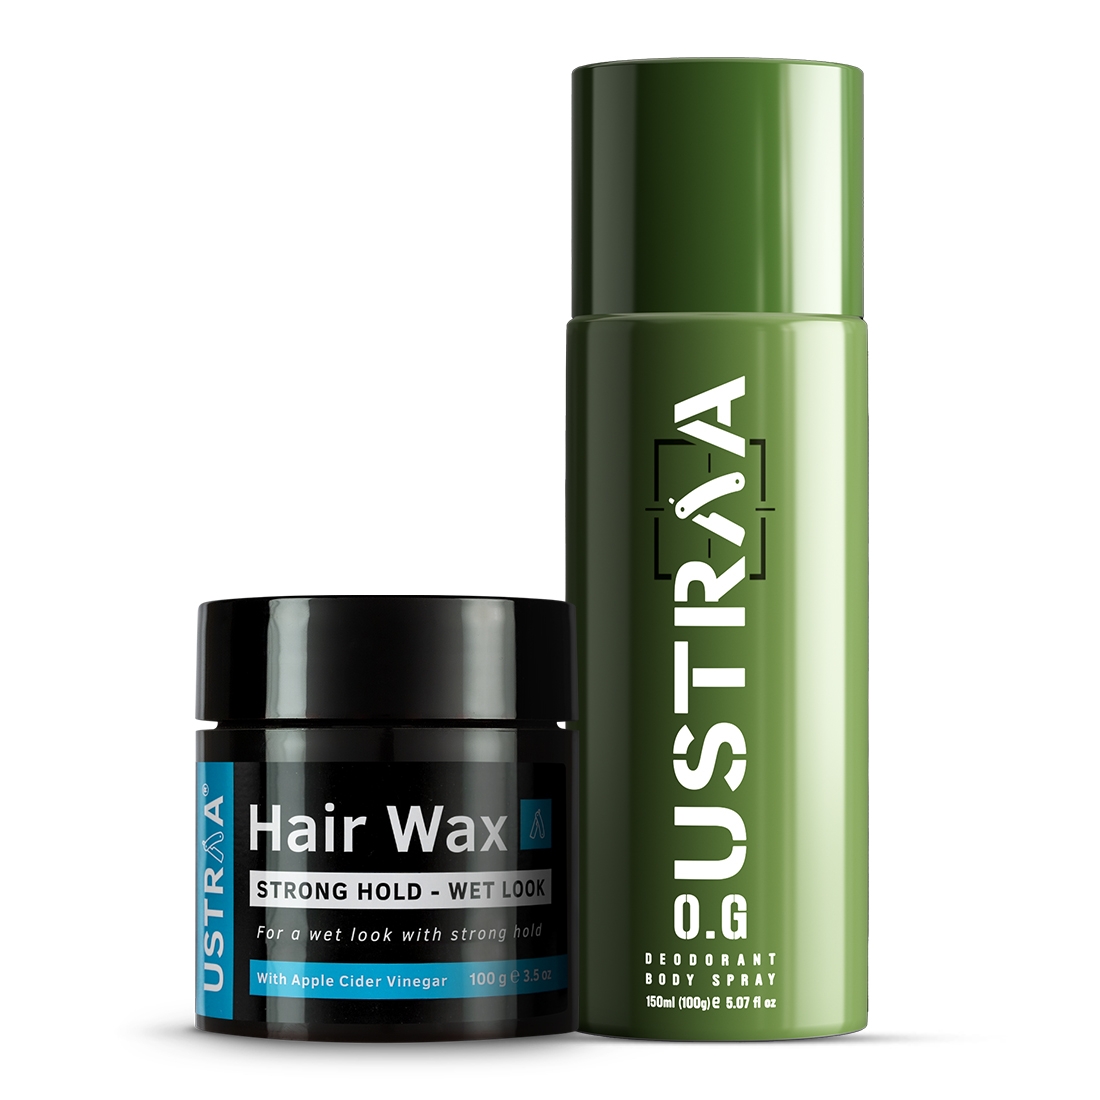 Ustraa O.G Deodorant - 150ml & Hair Wax Strong Hold Wet Look - 100g Combo